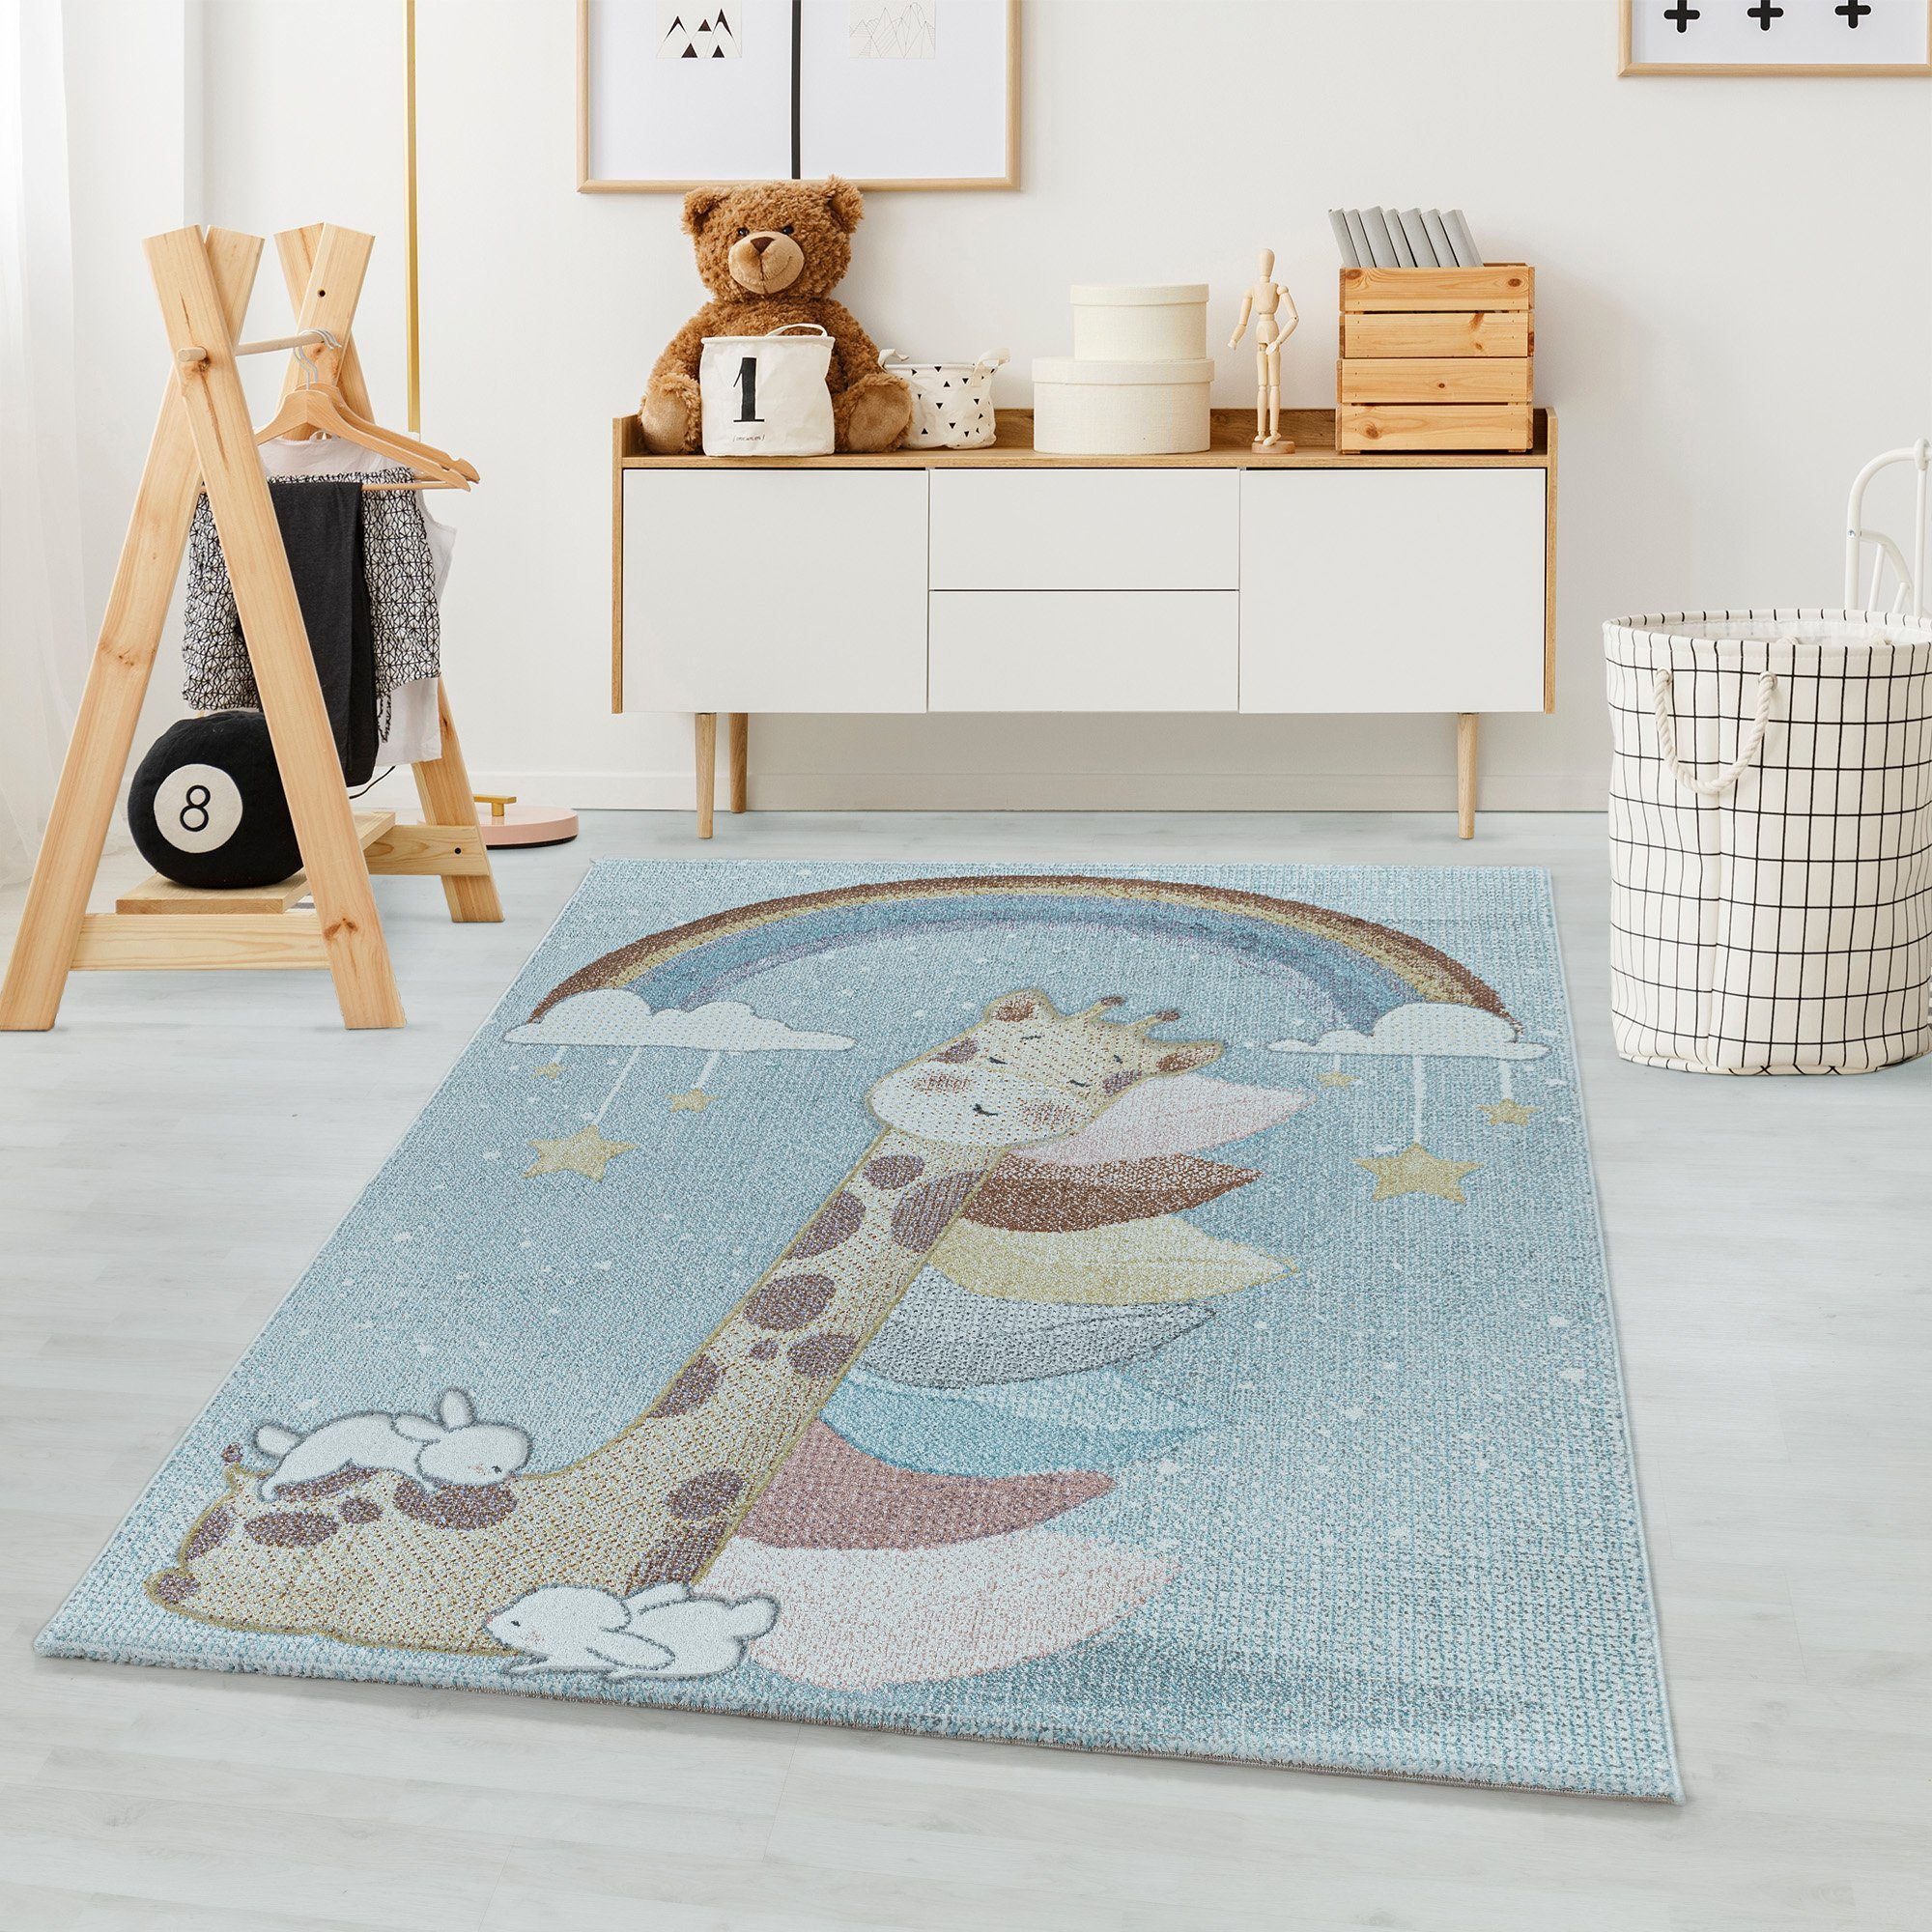 Kinderteppich Giraffen-Design, Carpetsale24, Läufer, Höhe: 9 mm, Kinderteppich Giraffe-Design Blau Pflegeleicht Teppich Kinderzimmer